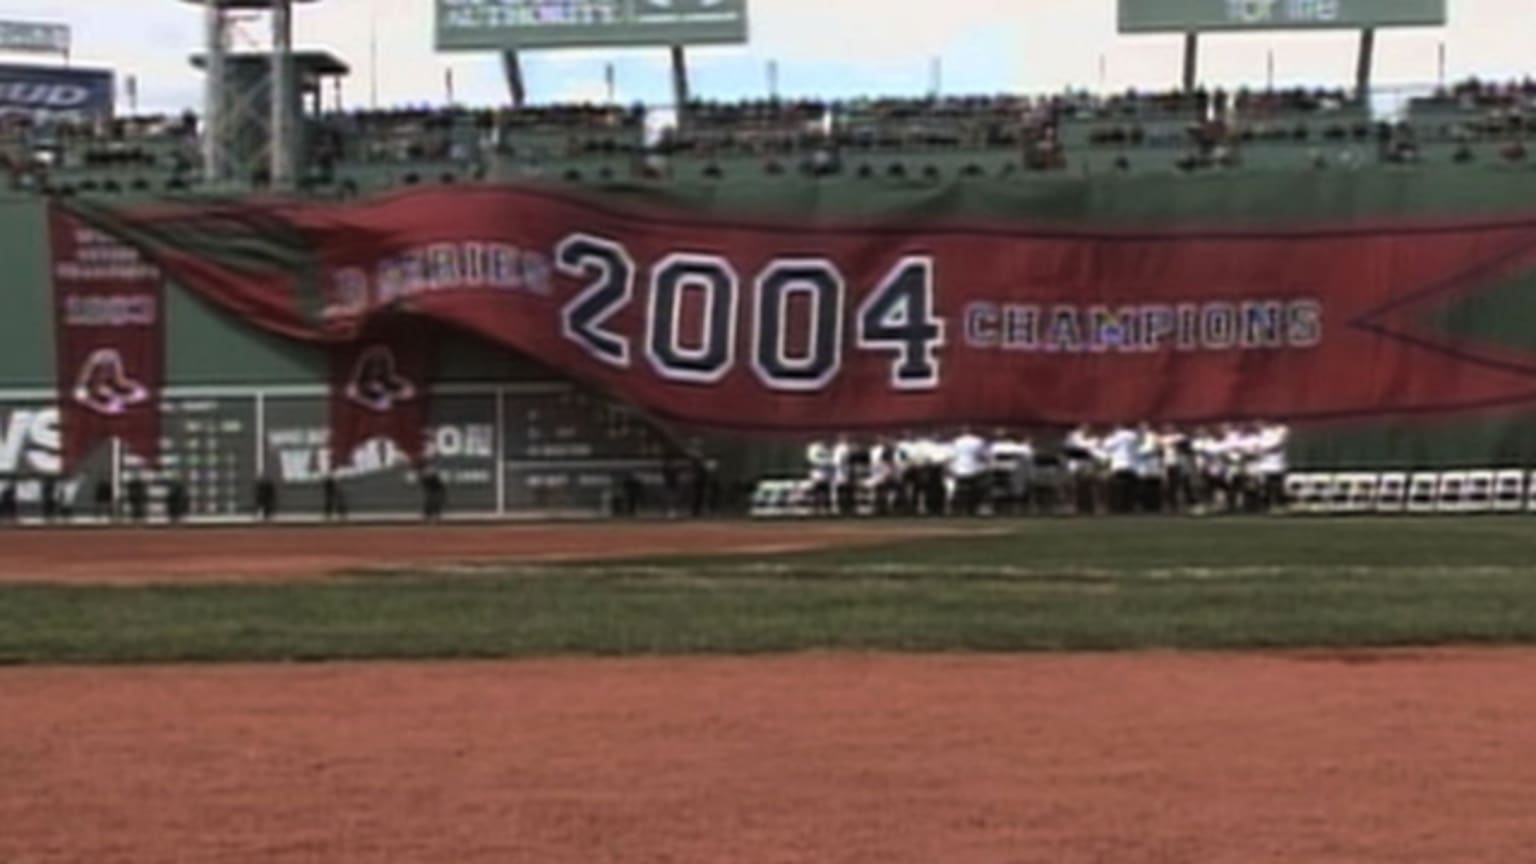 Vintage 00s Red MLB Boston Red Sox Making History 2004 World